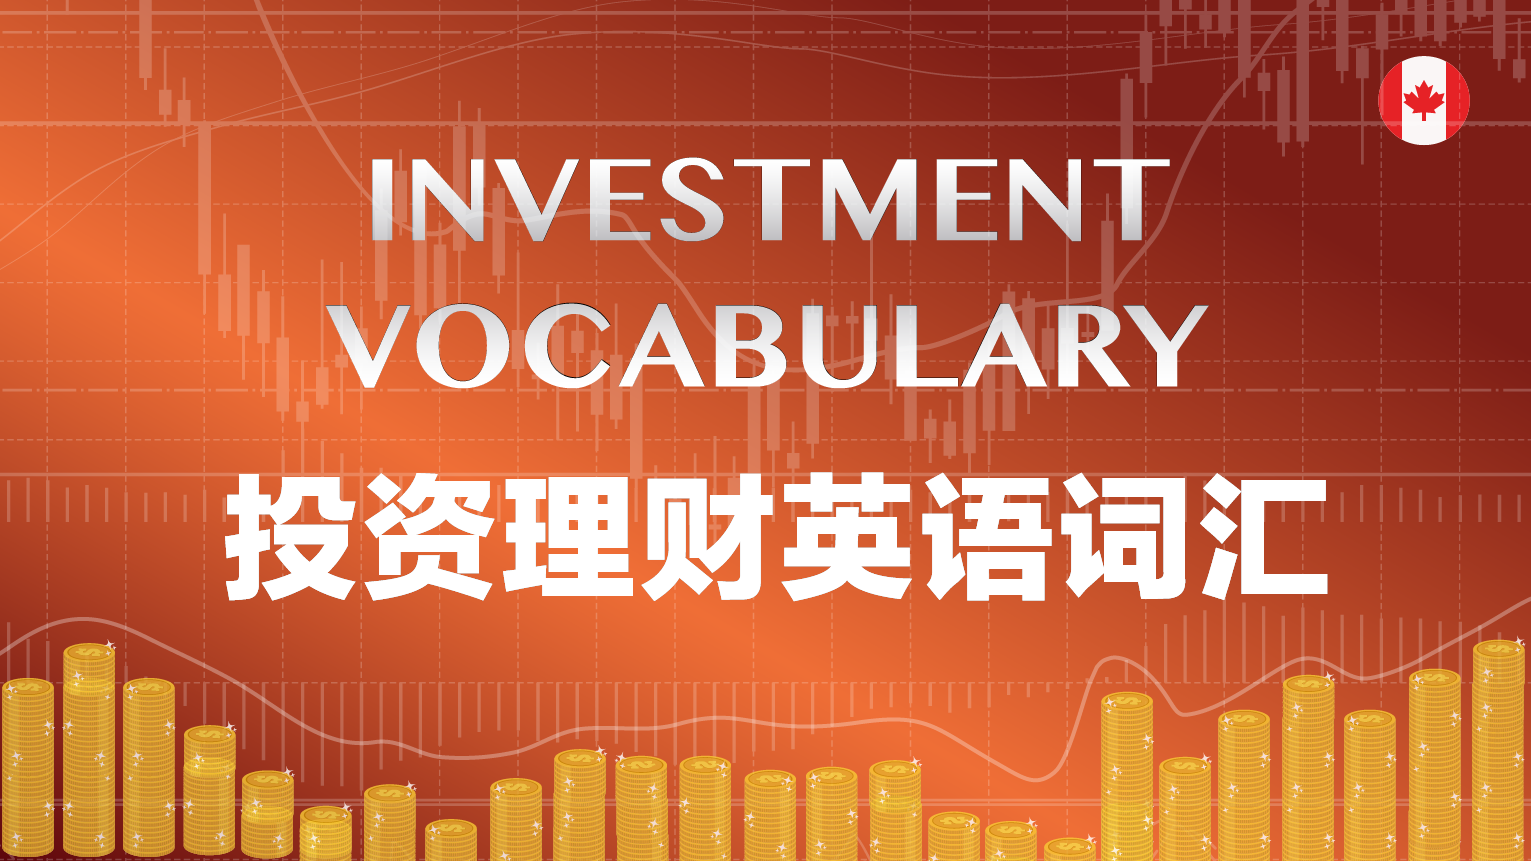 Investment Vocabulary